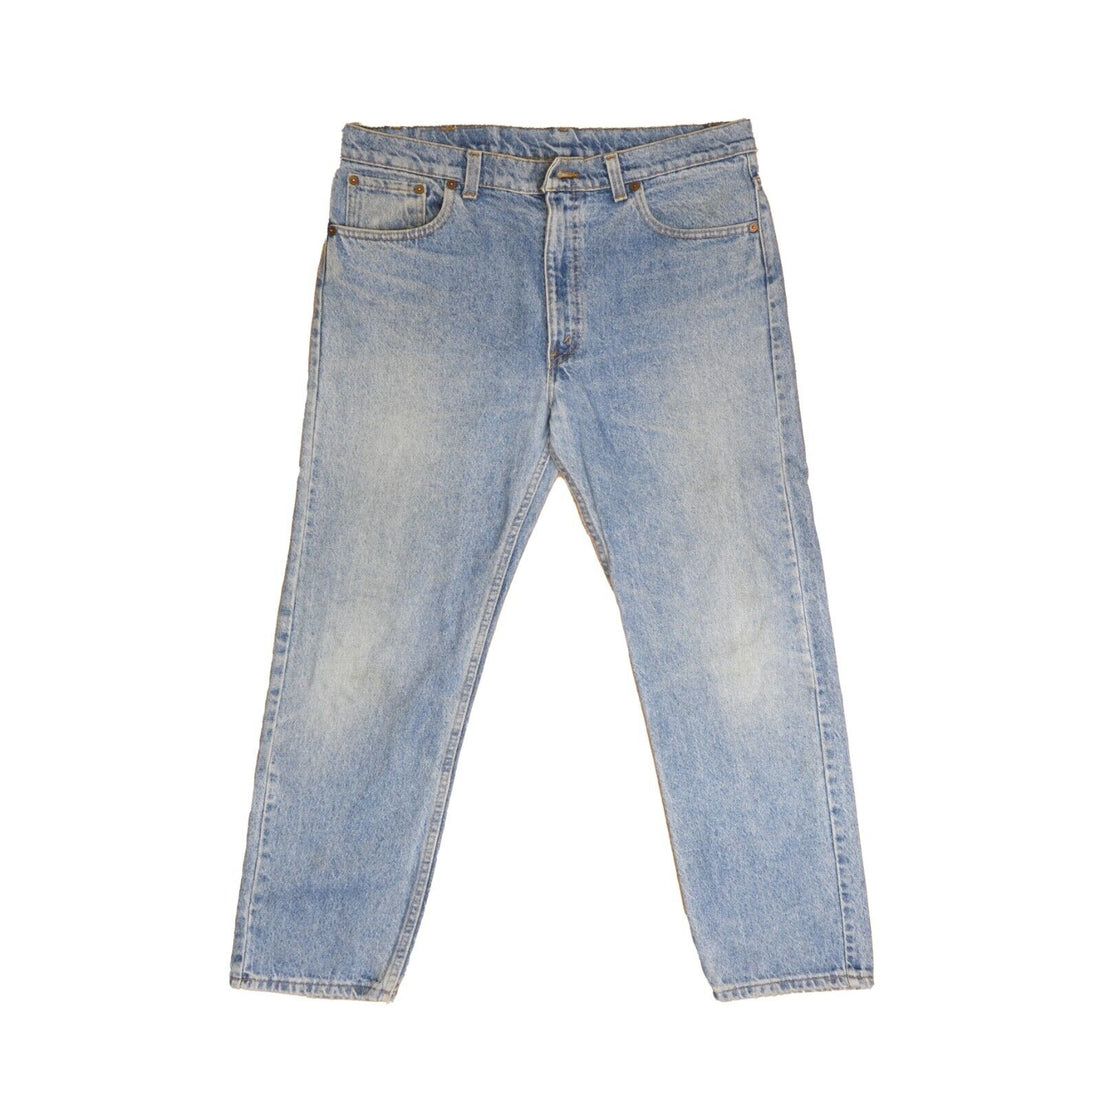 Vintage Levi Strauss & Co 505 Denim Jean Pants Size 36 X 29 Blue 505-4891